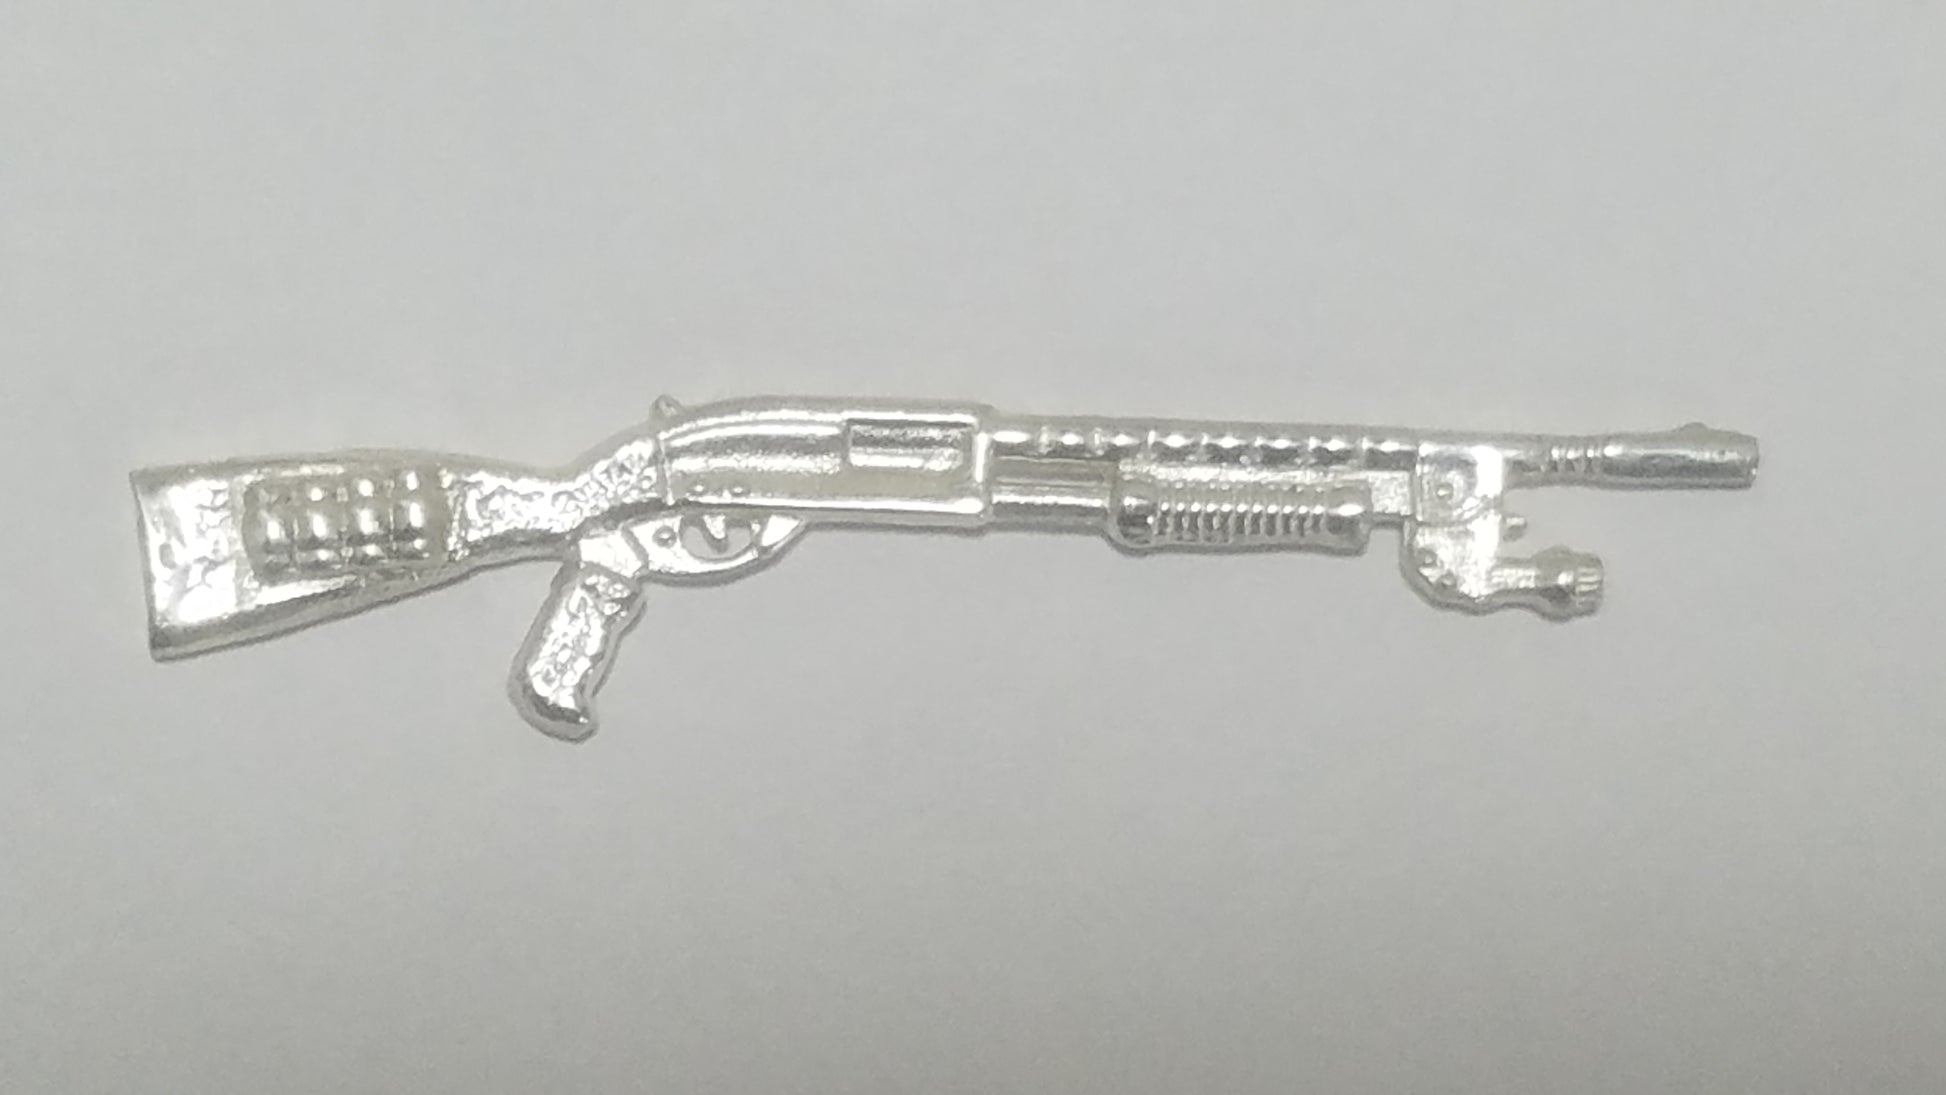 Tactical Shotgun 3.5" Long Solid .999 Fine Silver